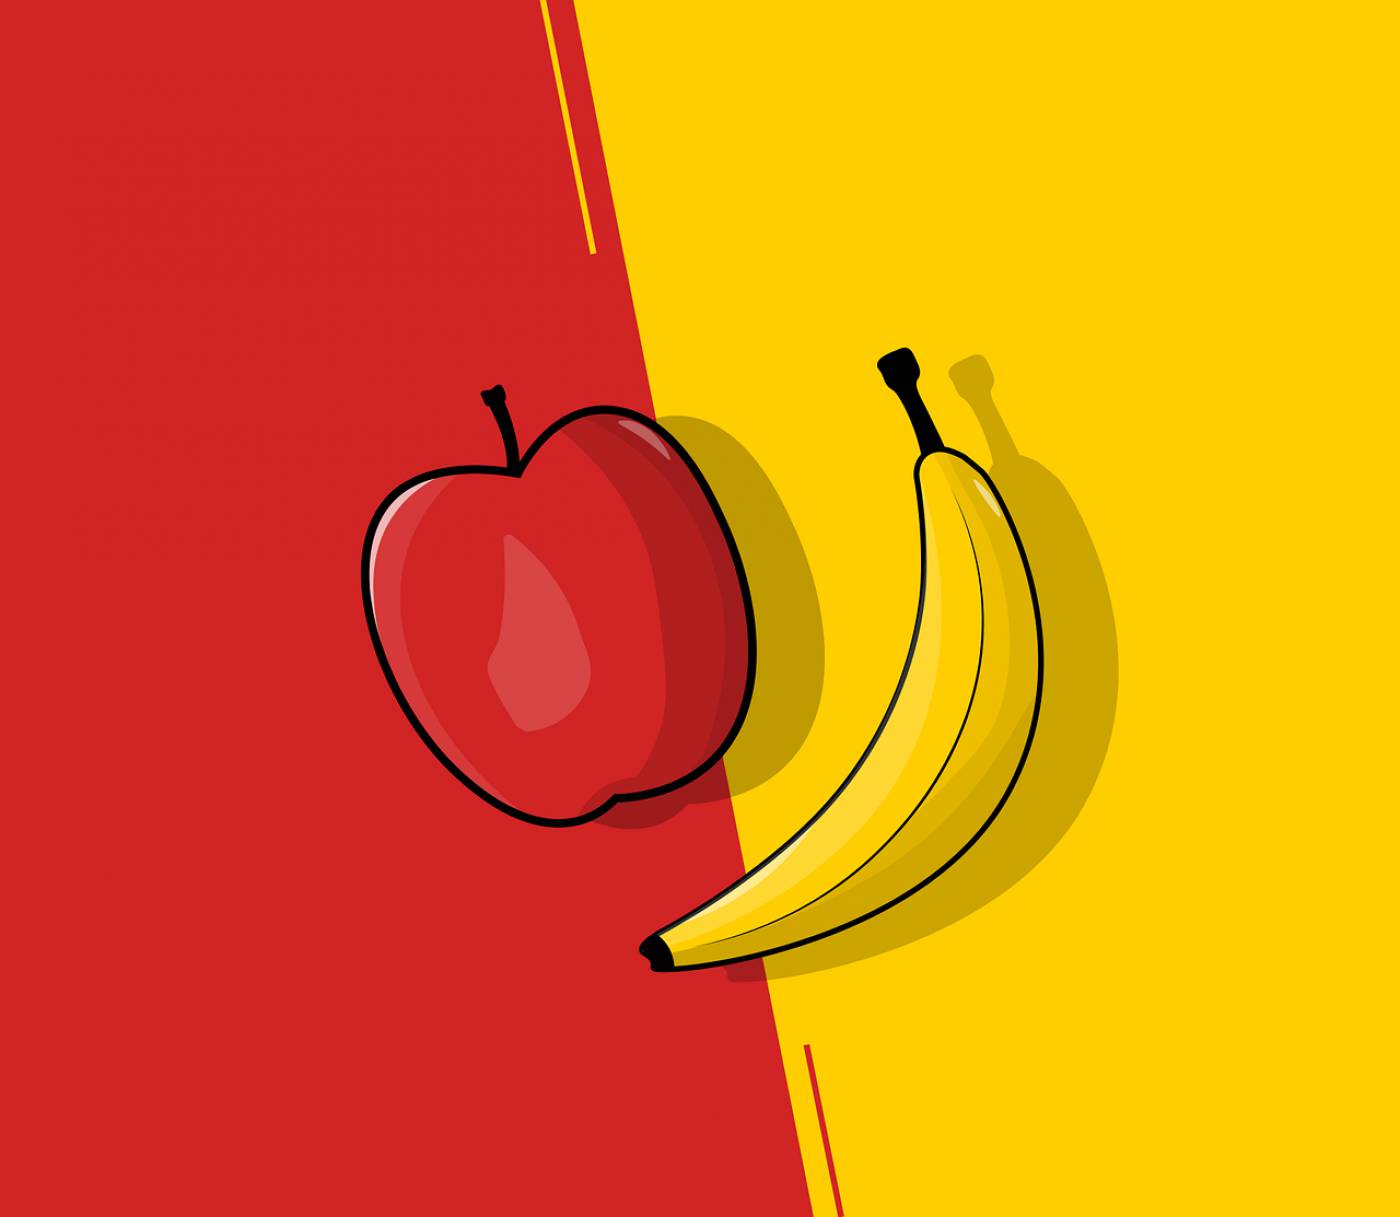 apple banana versus fruit battle  svg vector